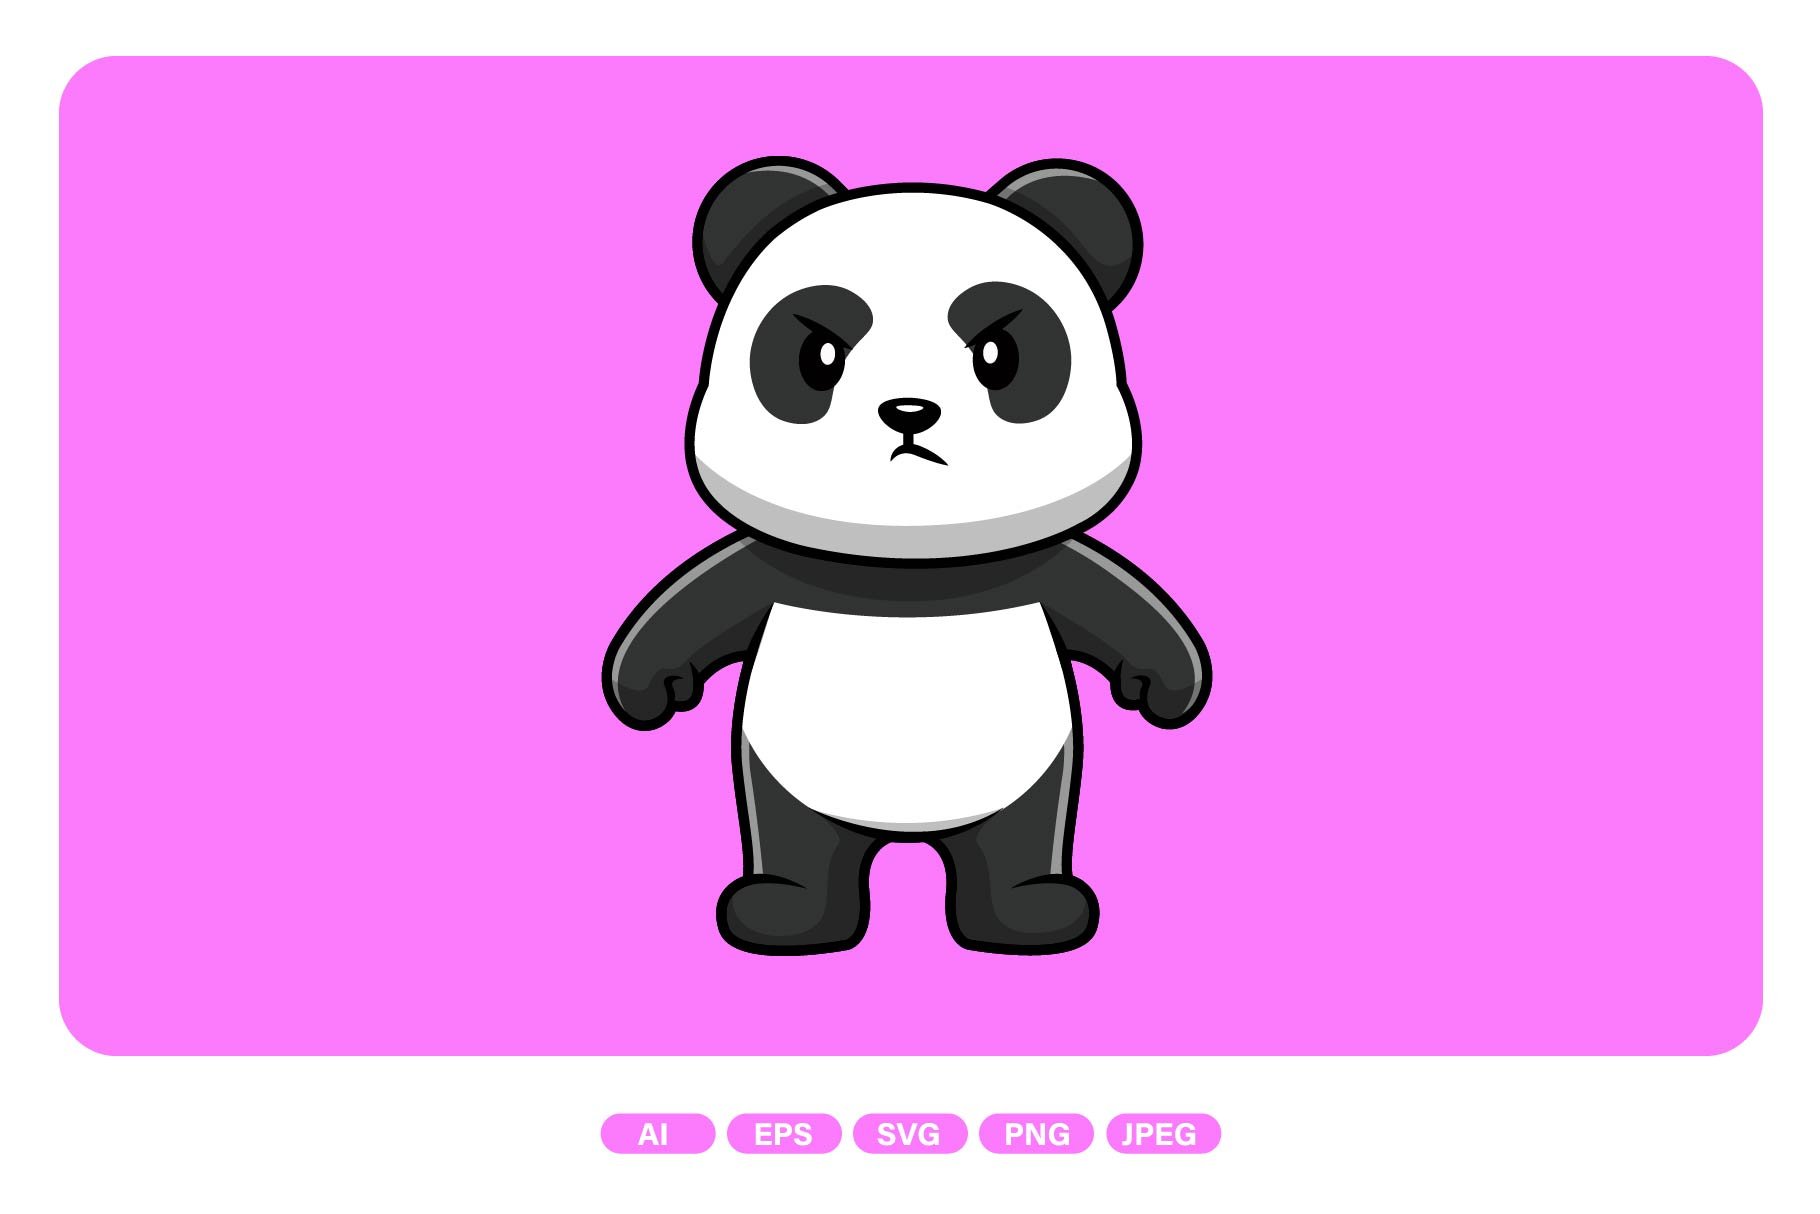 Cute Angry Panda cover image.